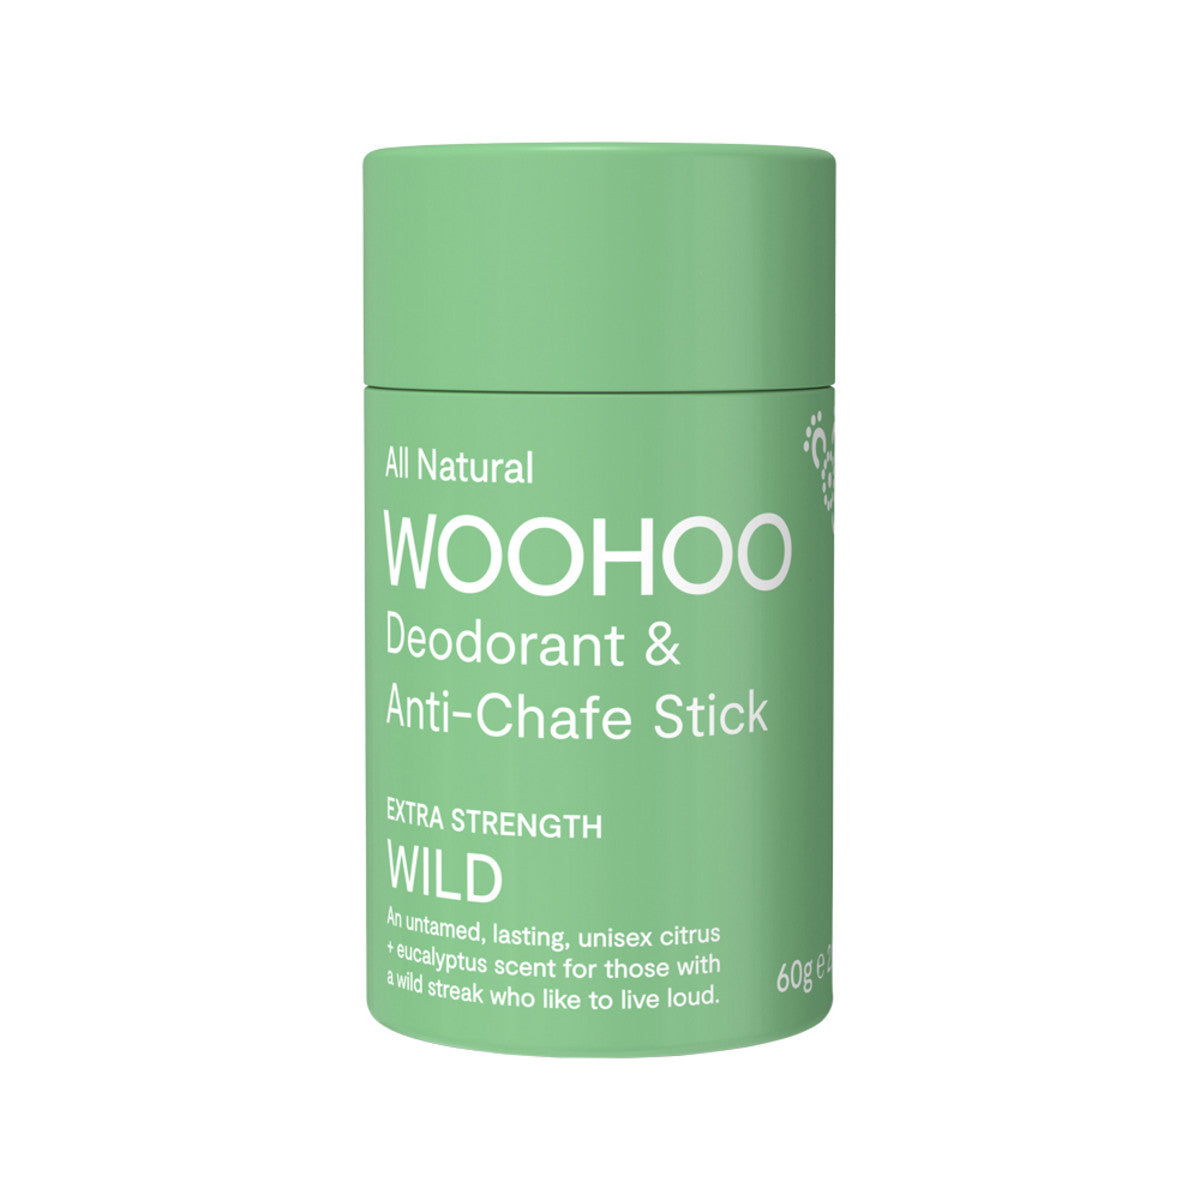 Woohoo Deodorant and Anti Chafe Stick Wild (Ult Stngth) 60g